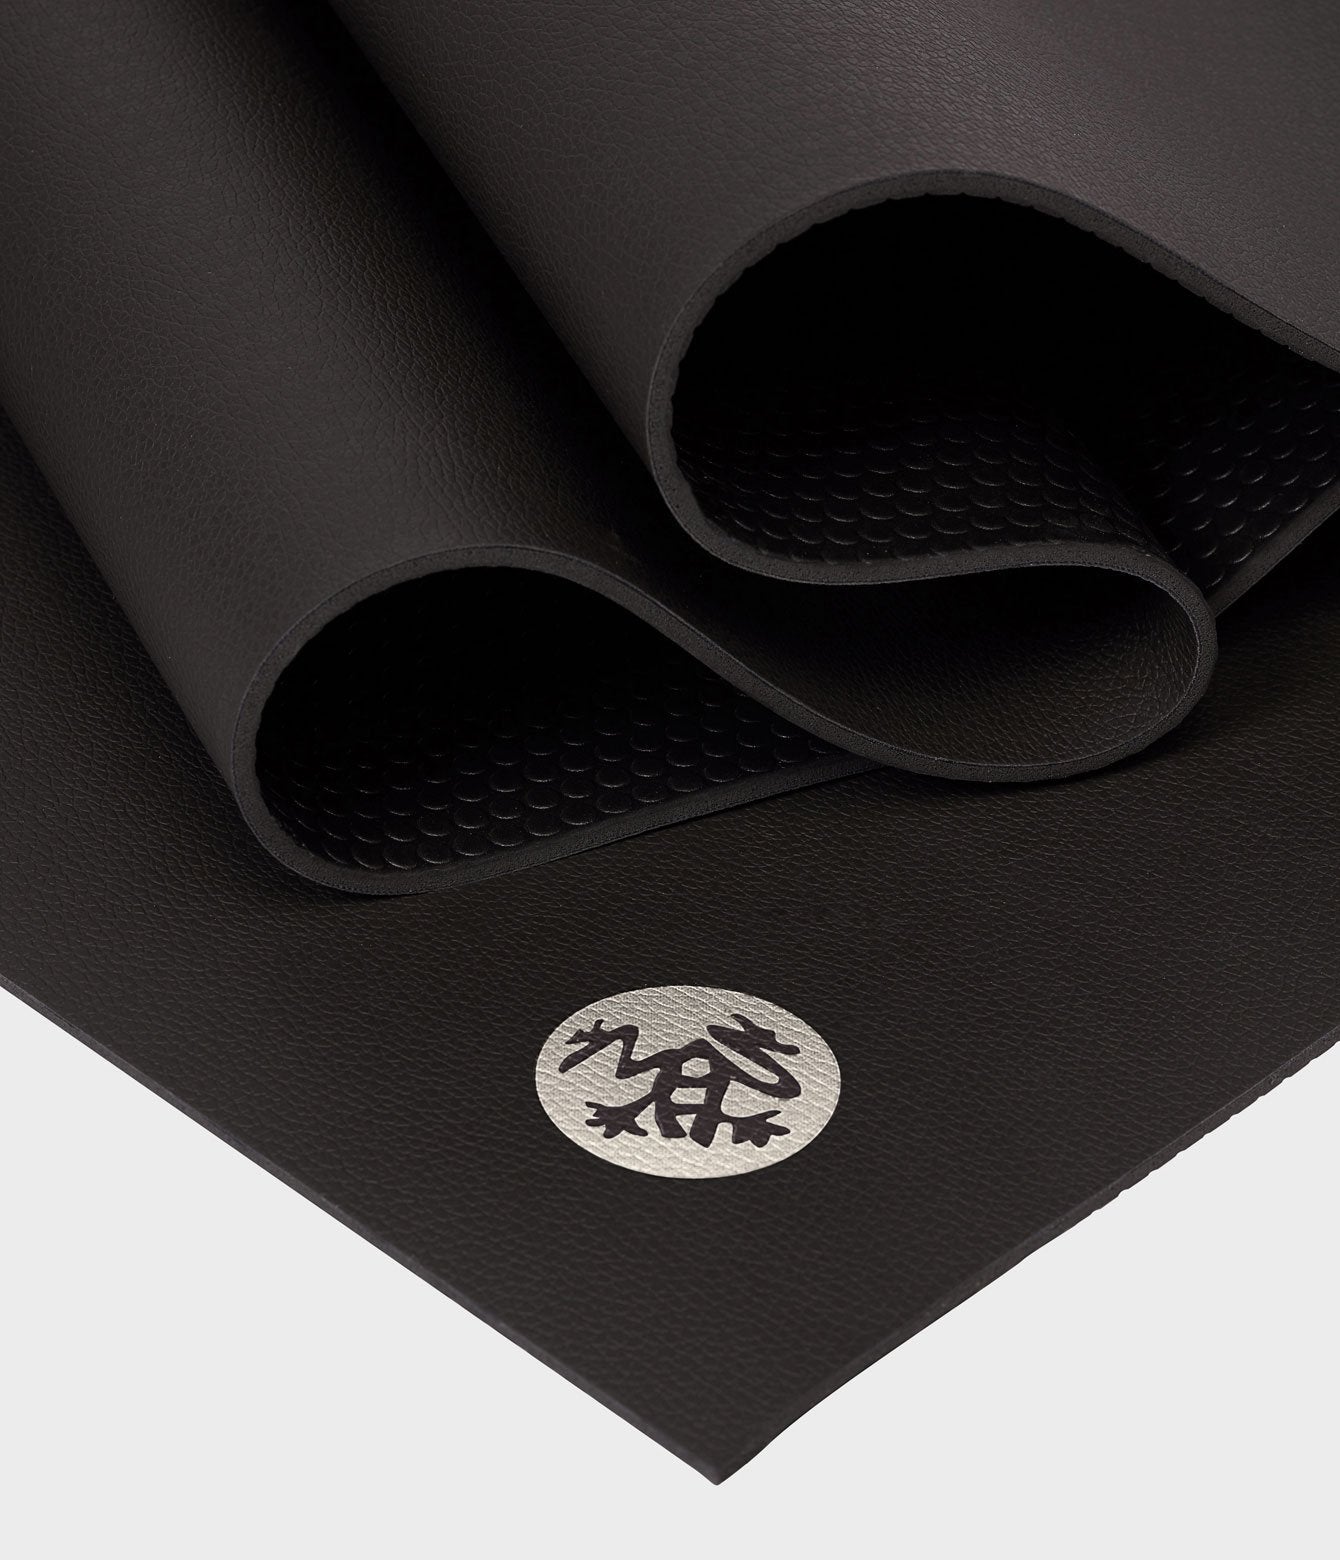 Manduka GRP® Lite Matras Yoga Panas 4mm - Hitam